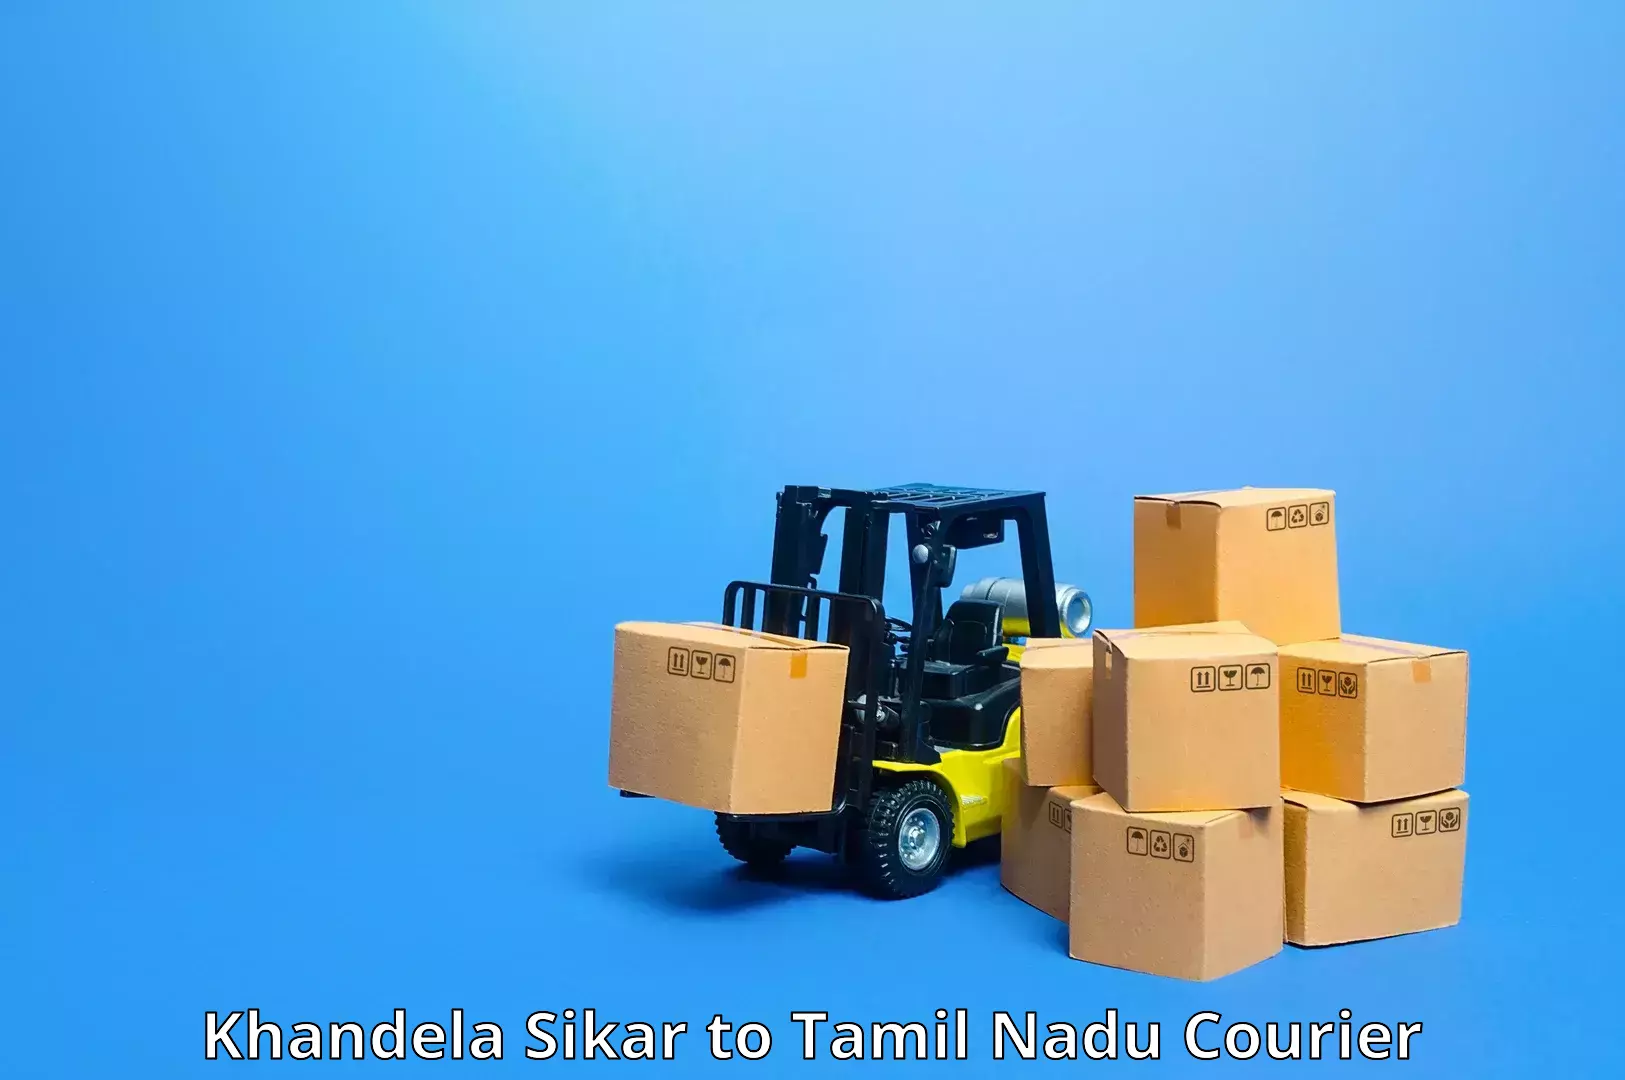 Express delivery solutions Khandela Sikar to Tindivanam